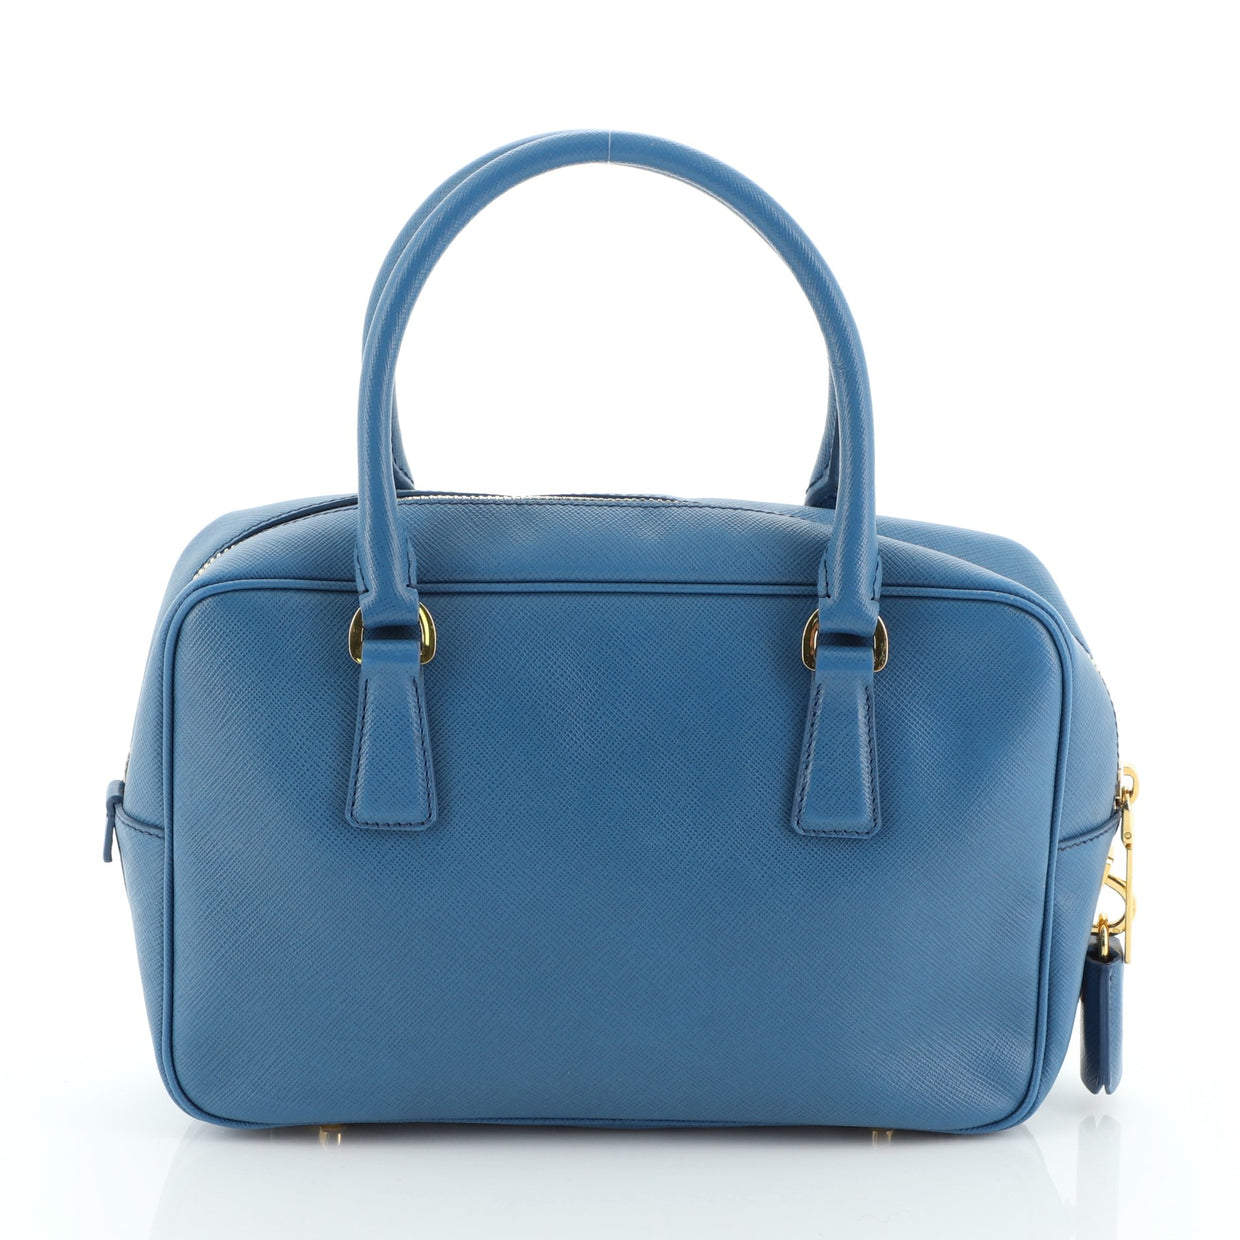 Prada Bauletto Bag Saffiano Leather Small Blue 560321